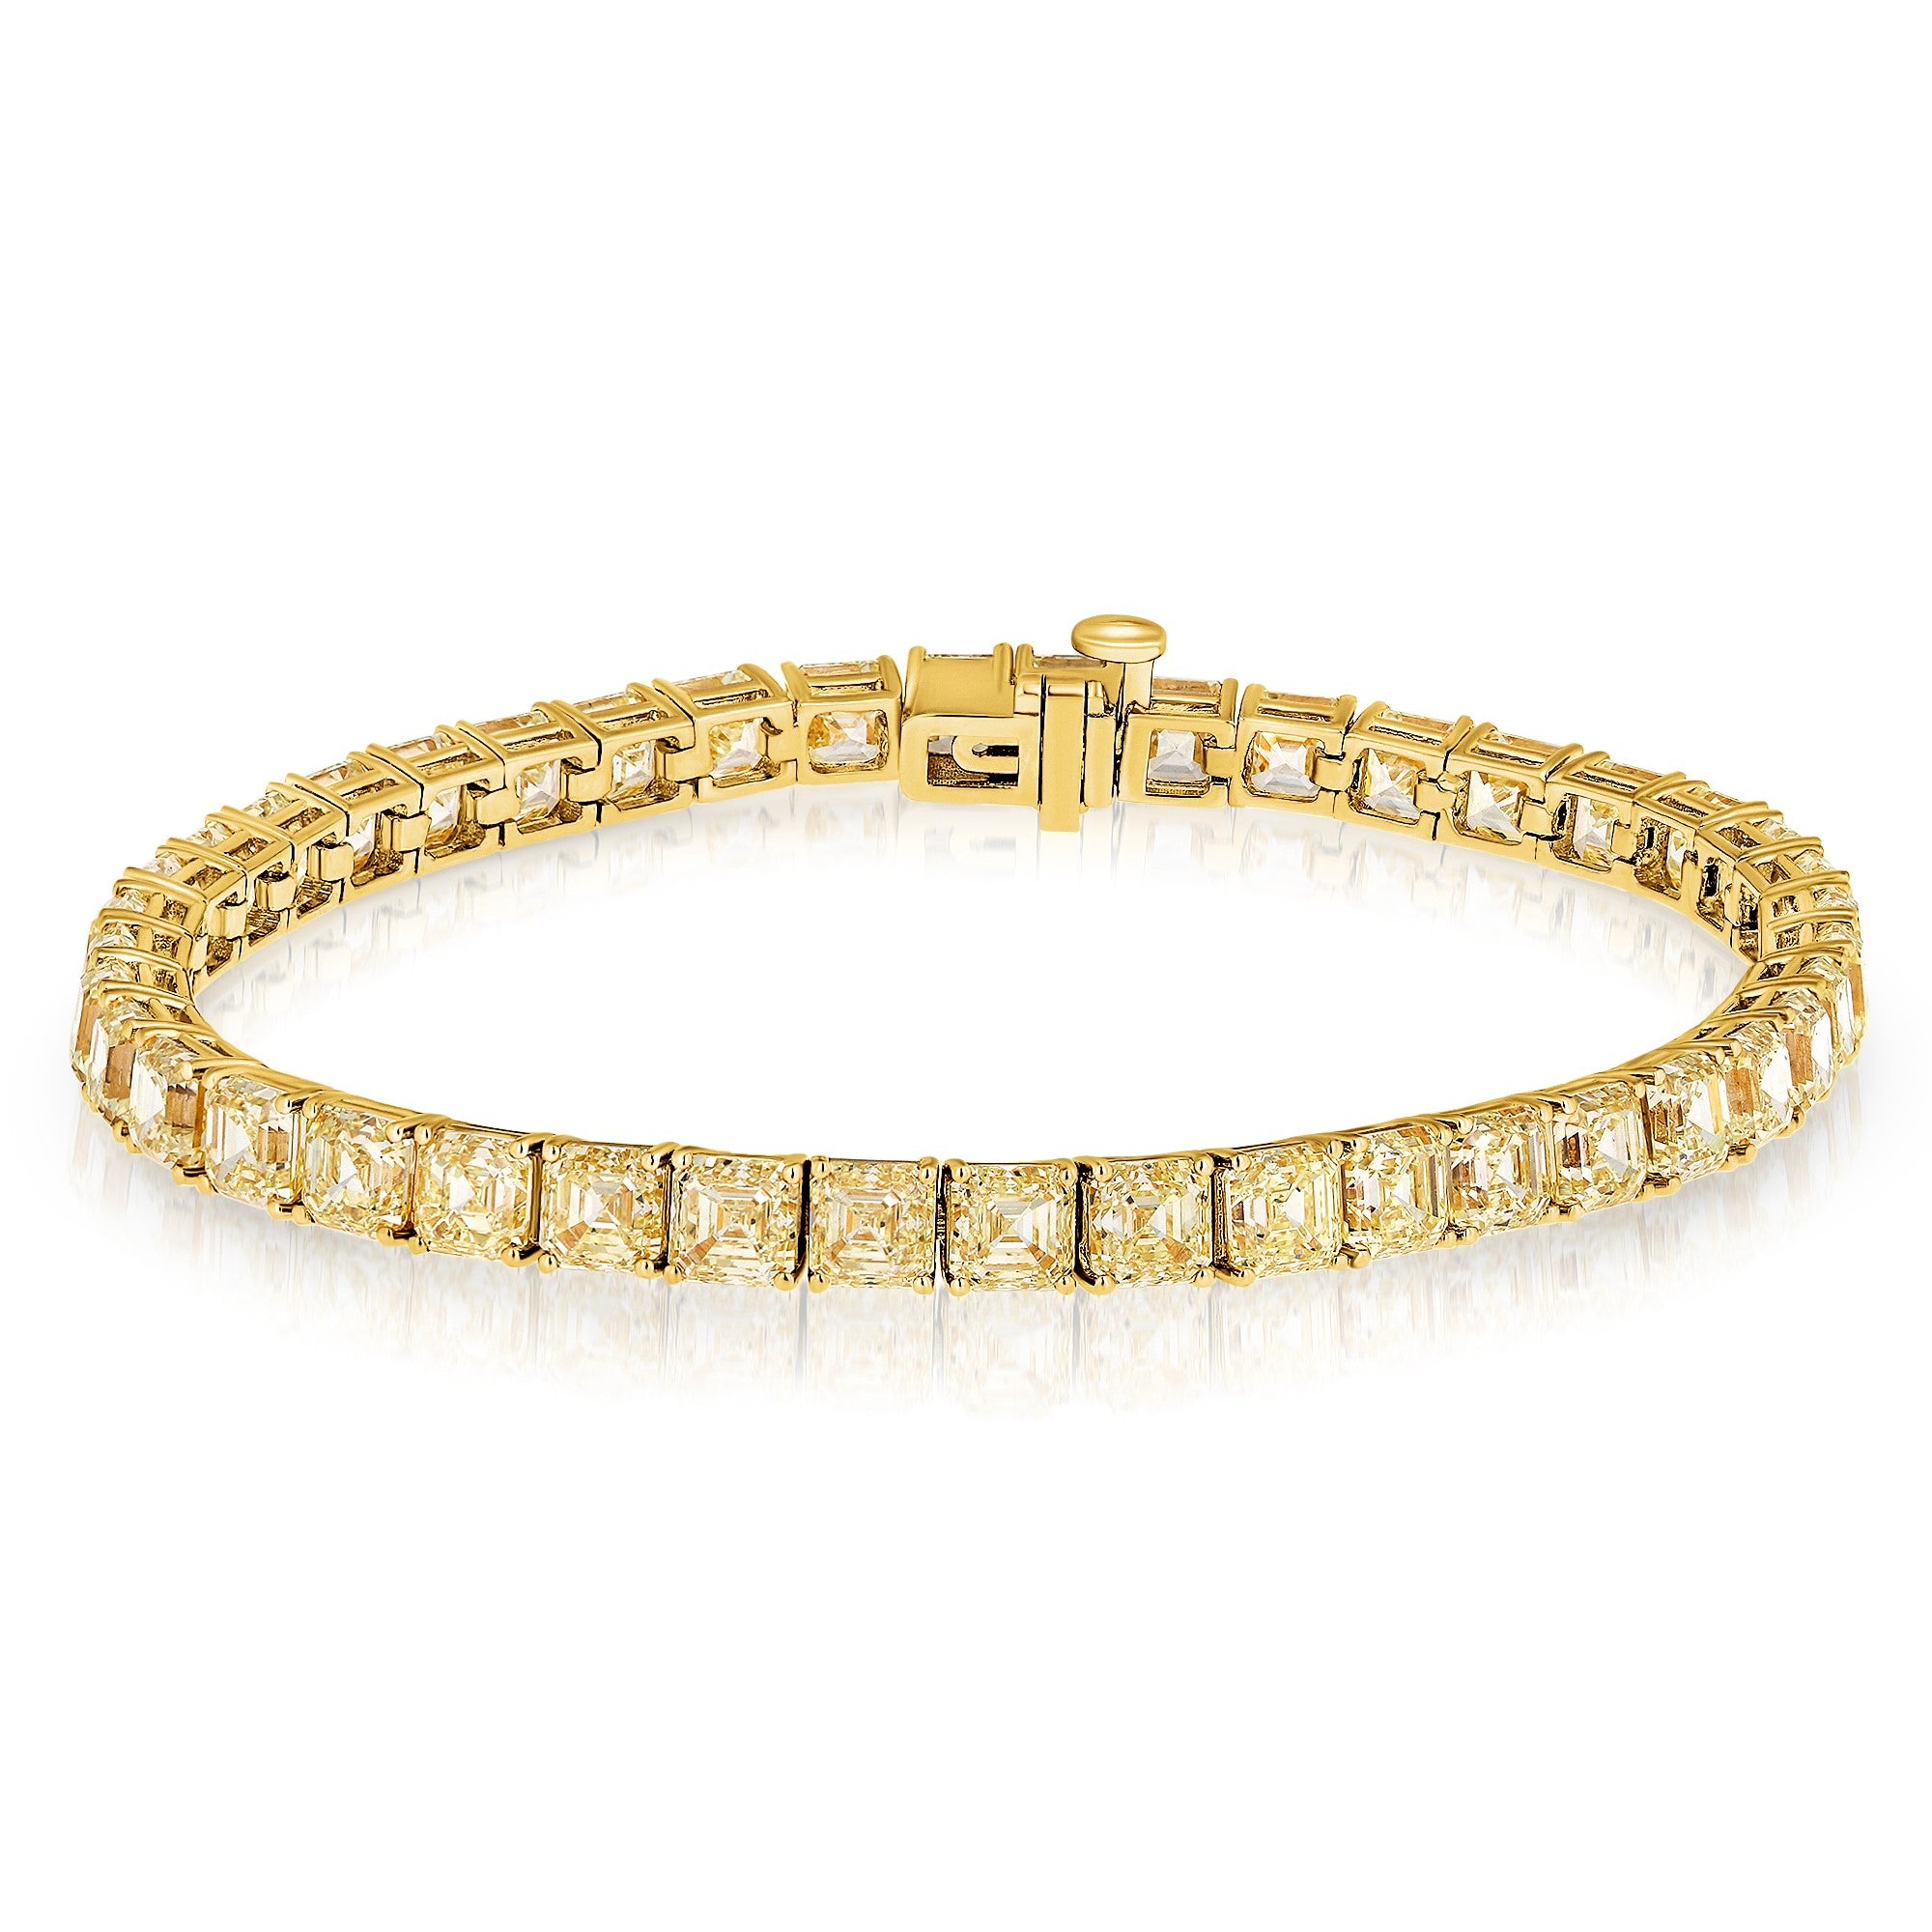 20.87carat Exquisite Diamond Asscher-cut Canary Fancy Yellow Diamond Tennis Line Bracelet